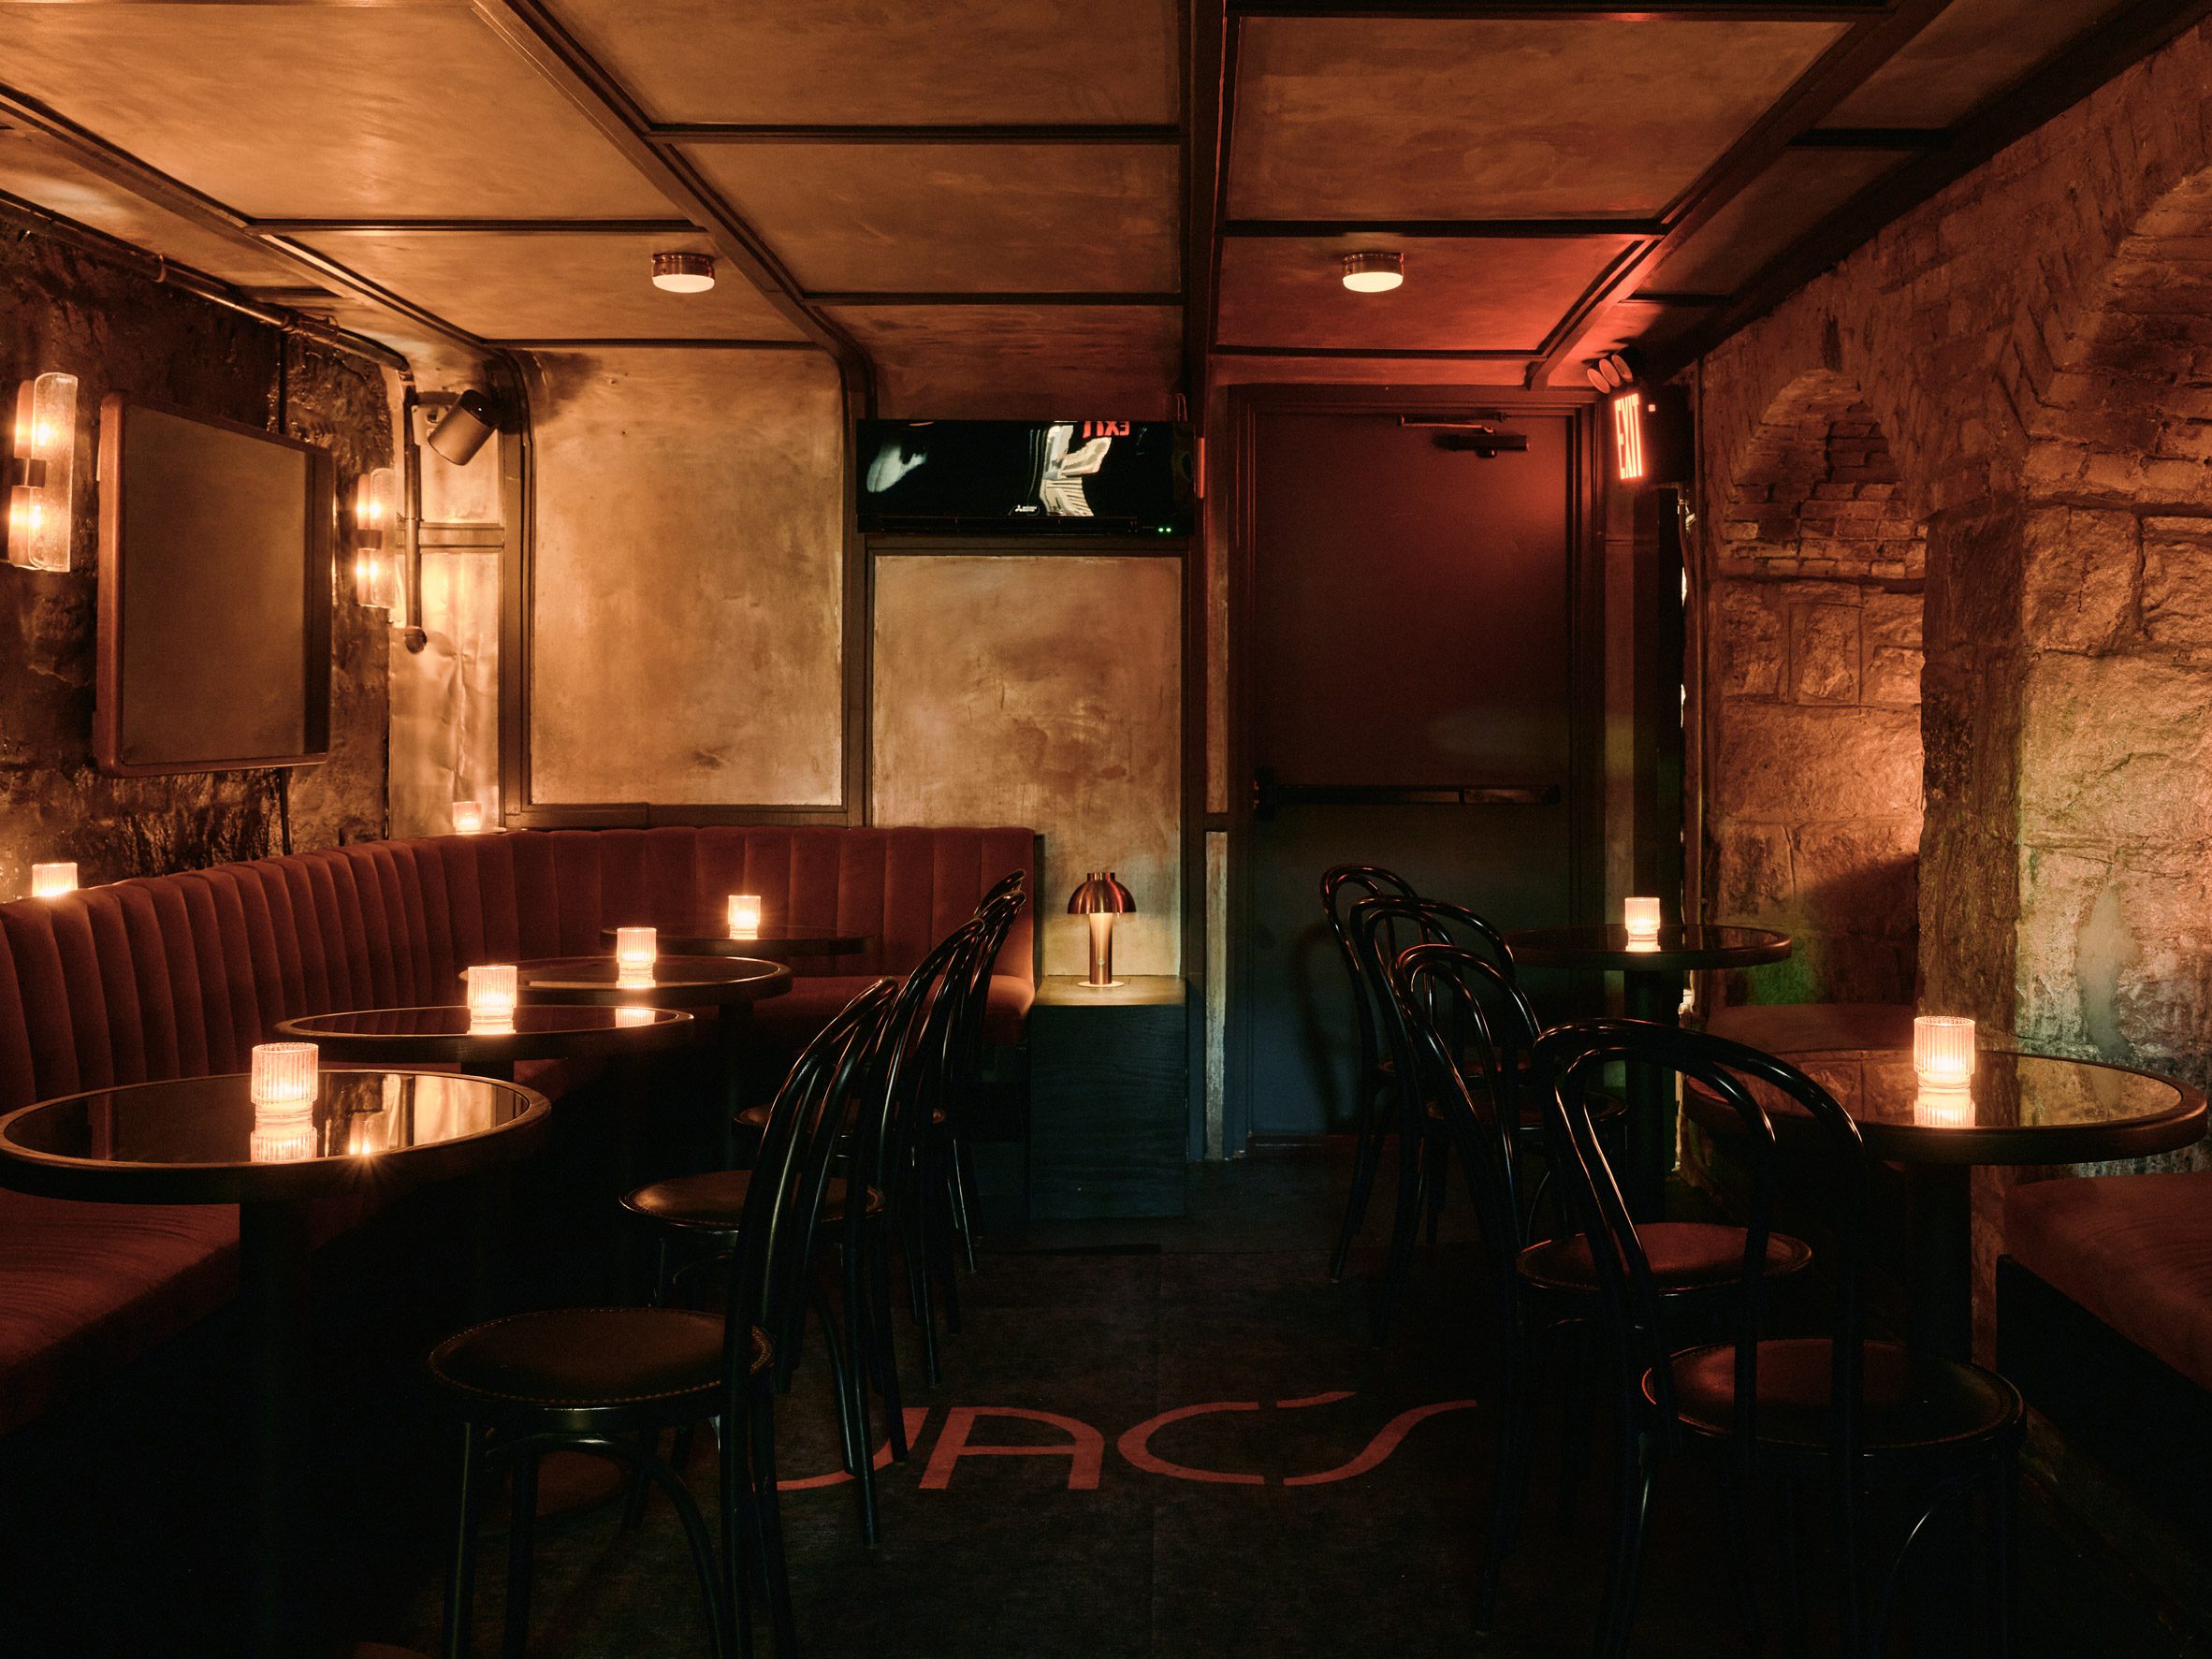 Dimly lit basement bar in a former wine cellar